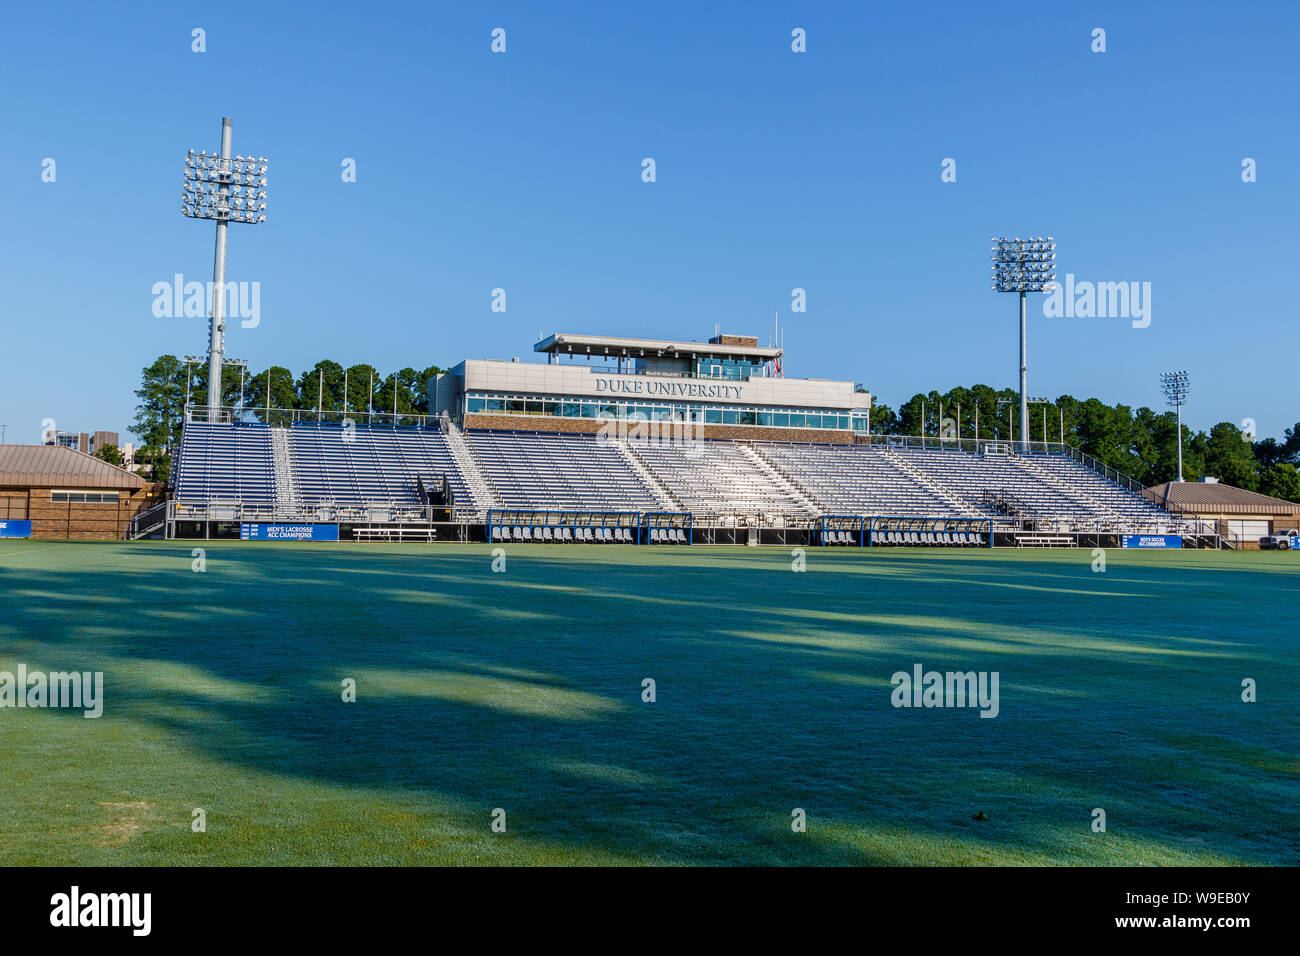 DURHAM, NC, Stati Uniti d'America - 8 agosto: Koskinen Stadium il 8 agosto 2019 presso la Duke University di Durham, North Carolina. Foto Stock